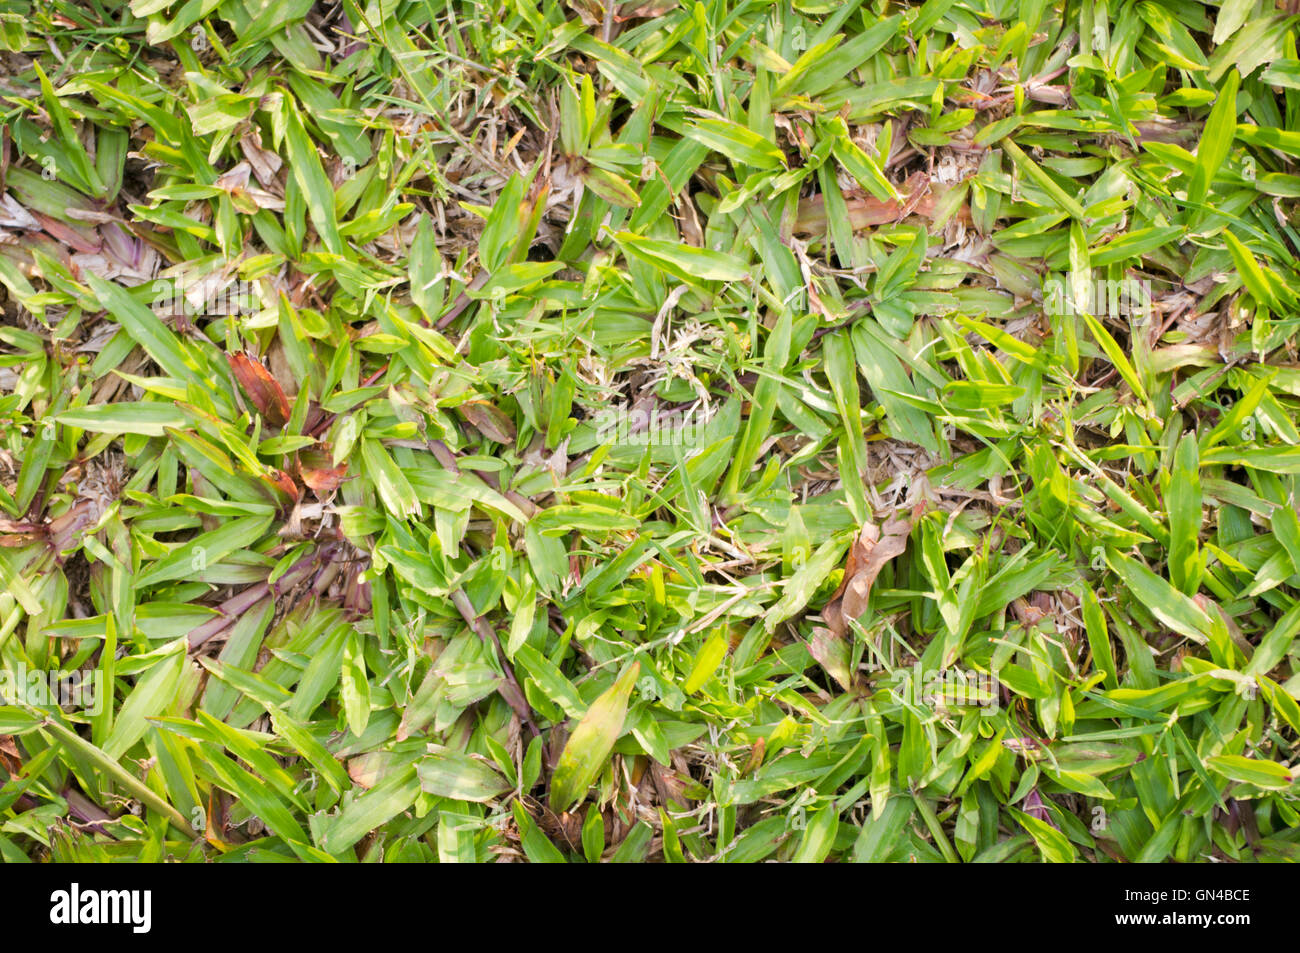 grass textures Stock Photo